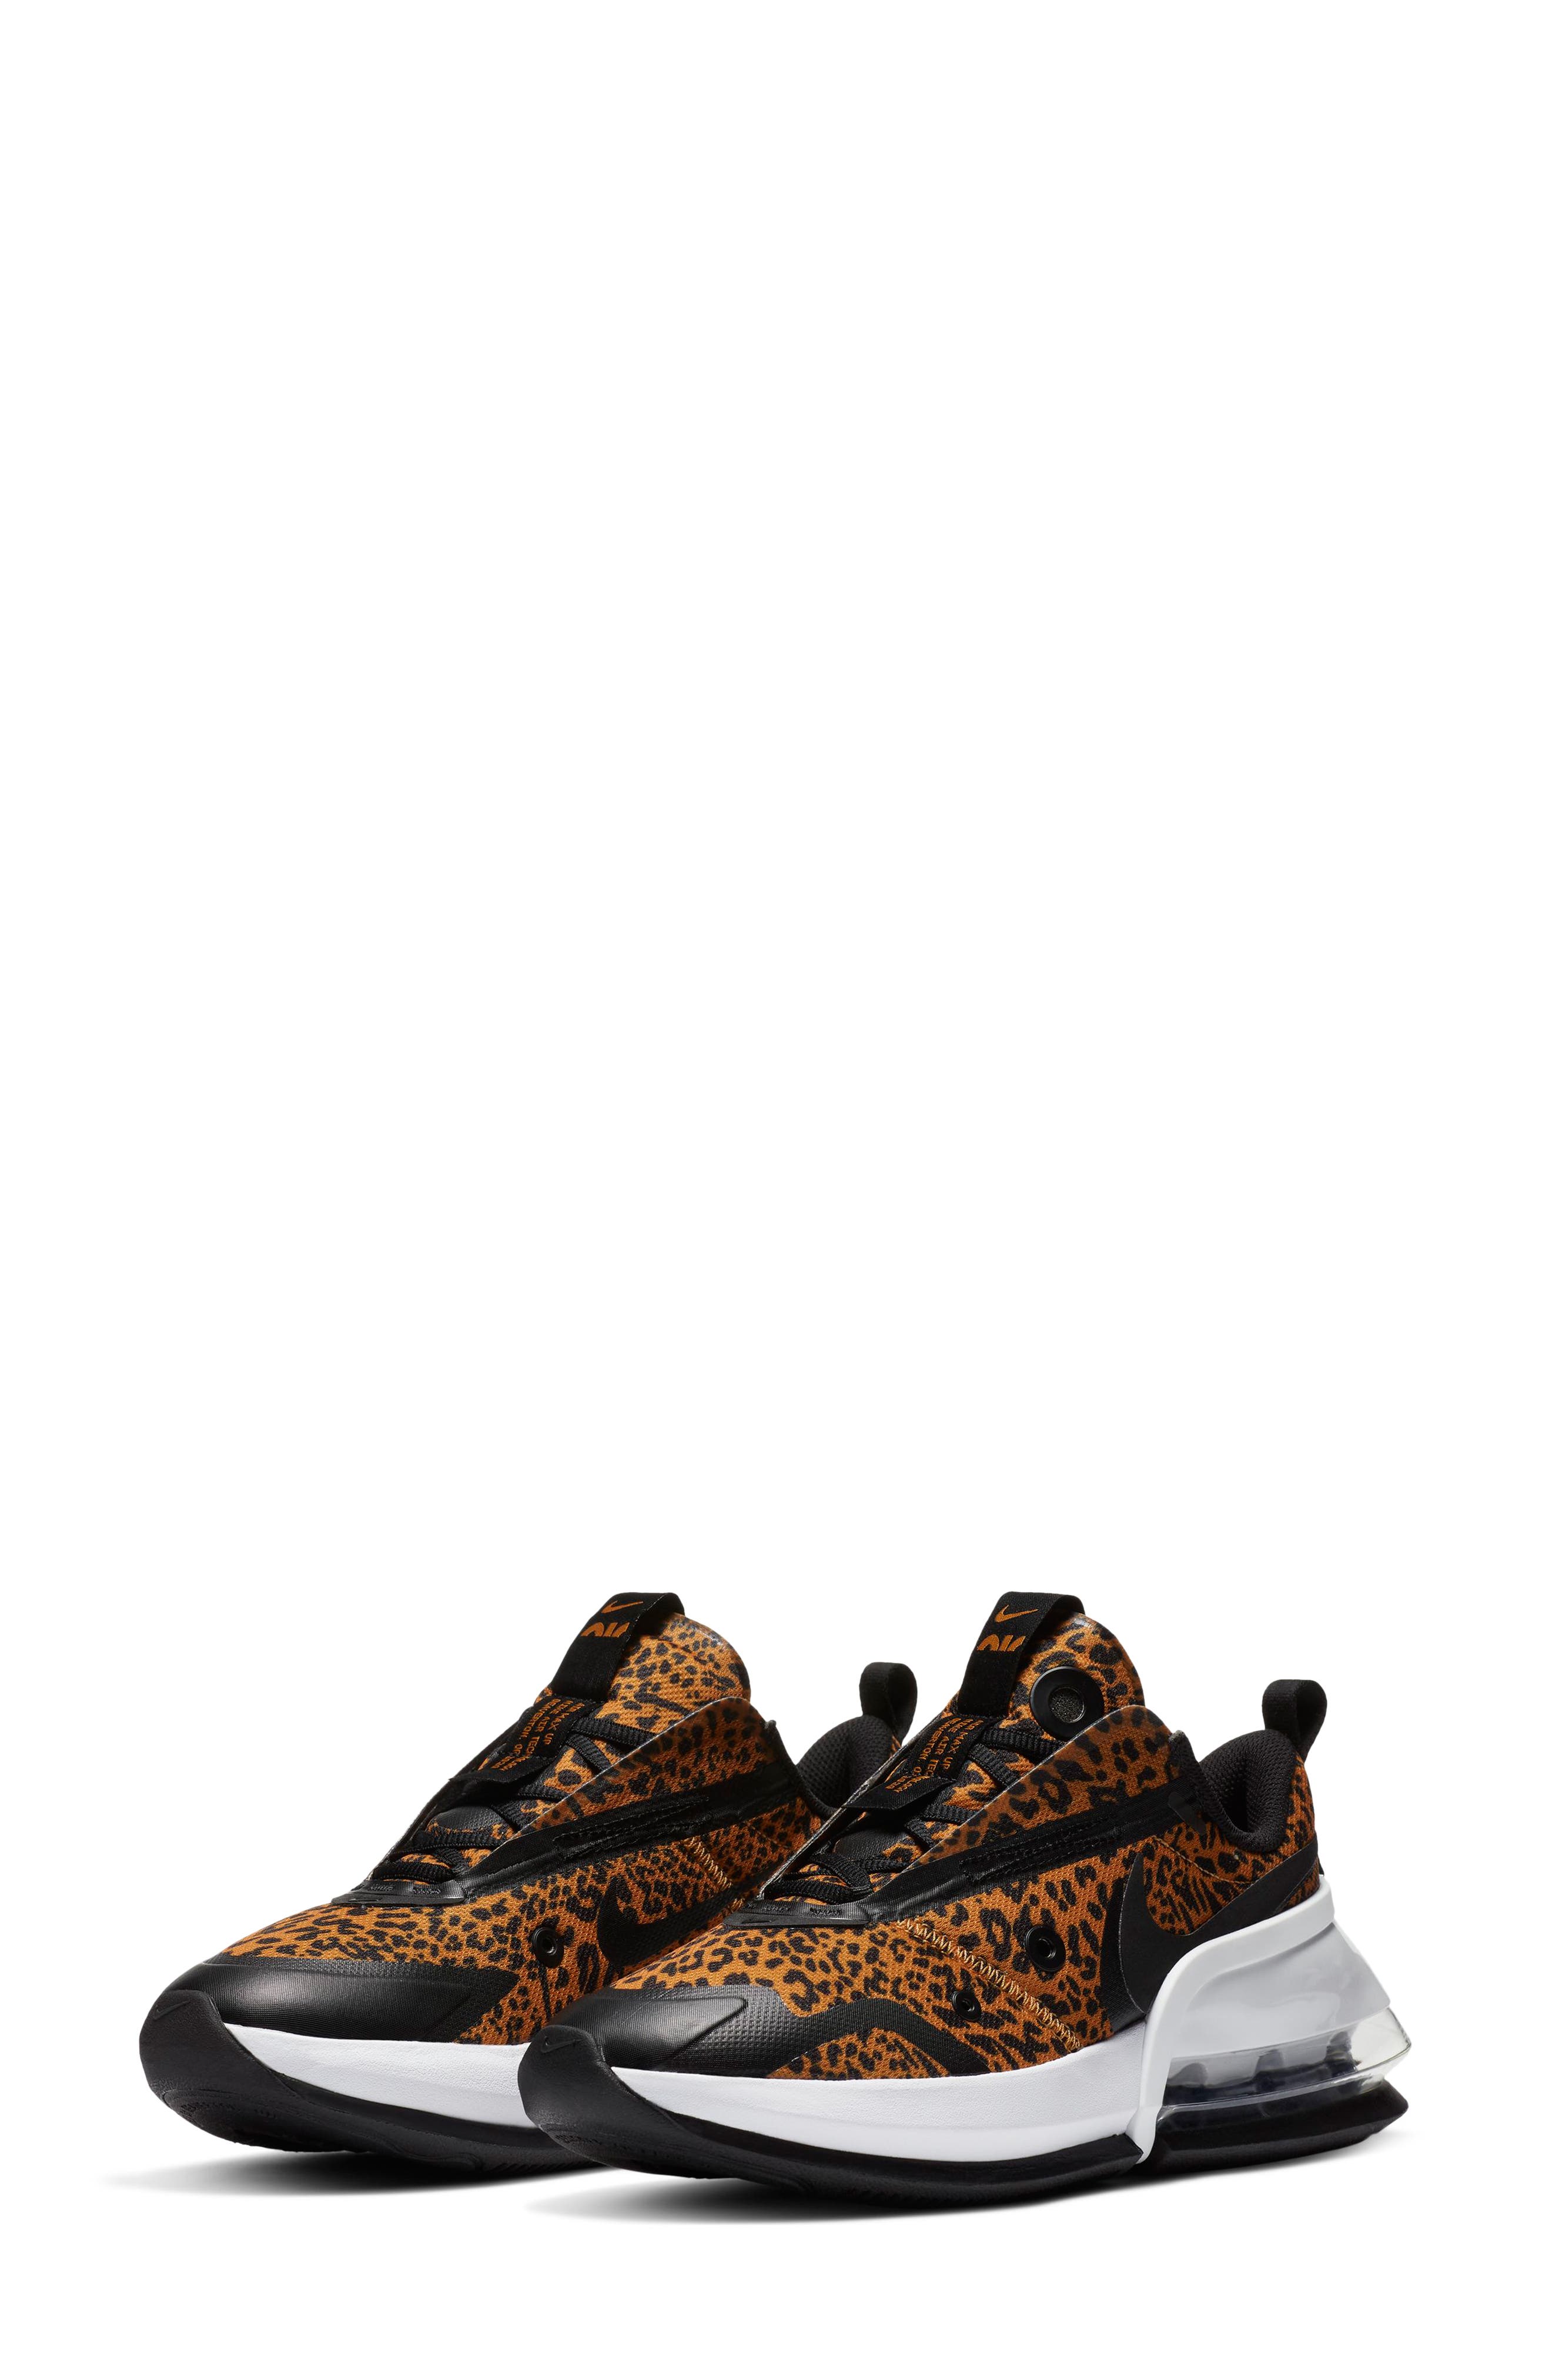 womens nike leopard print shoes